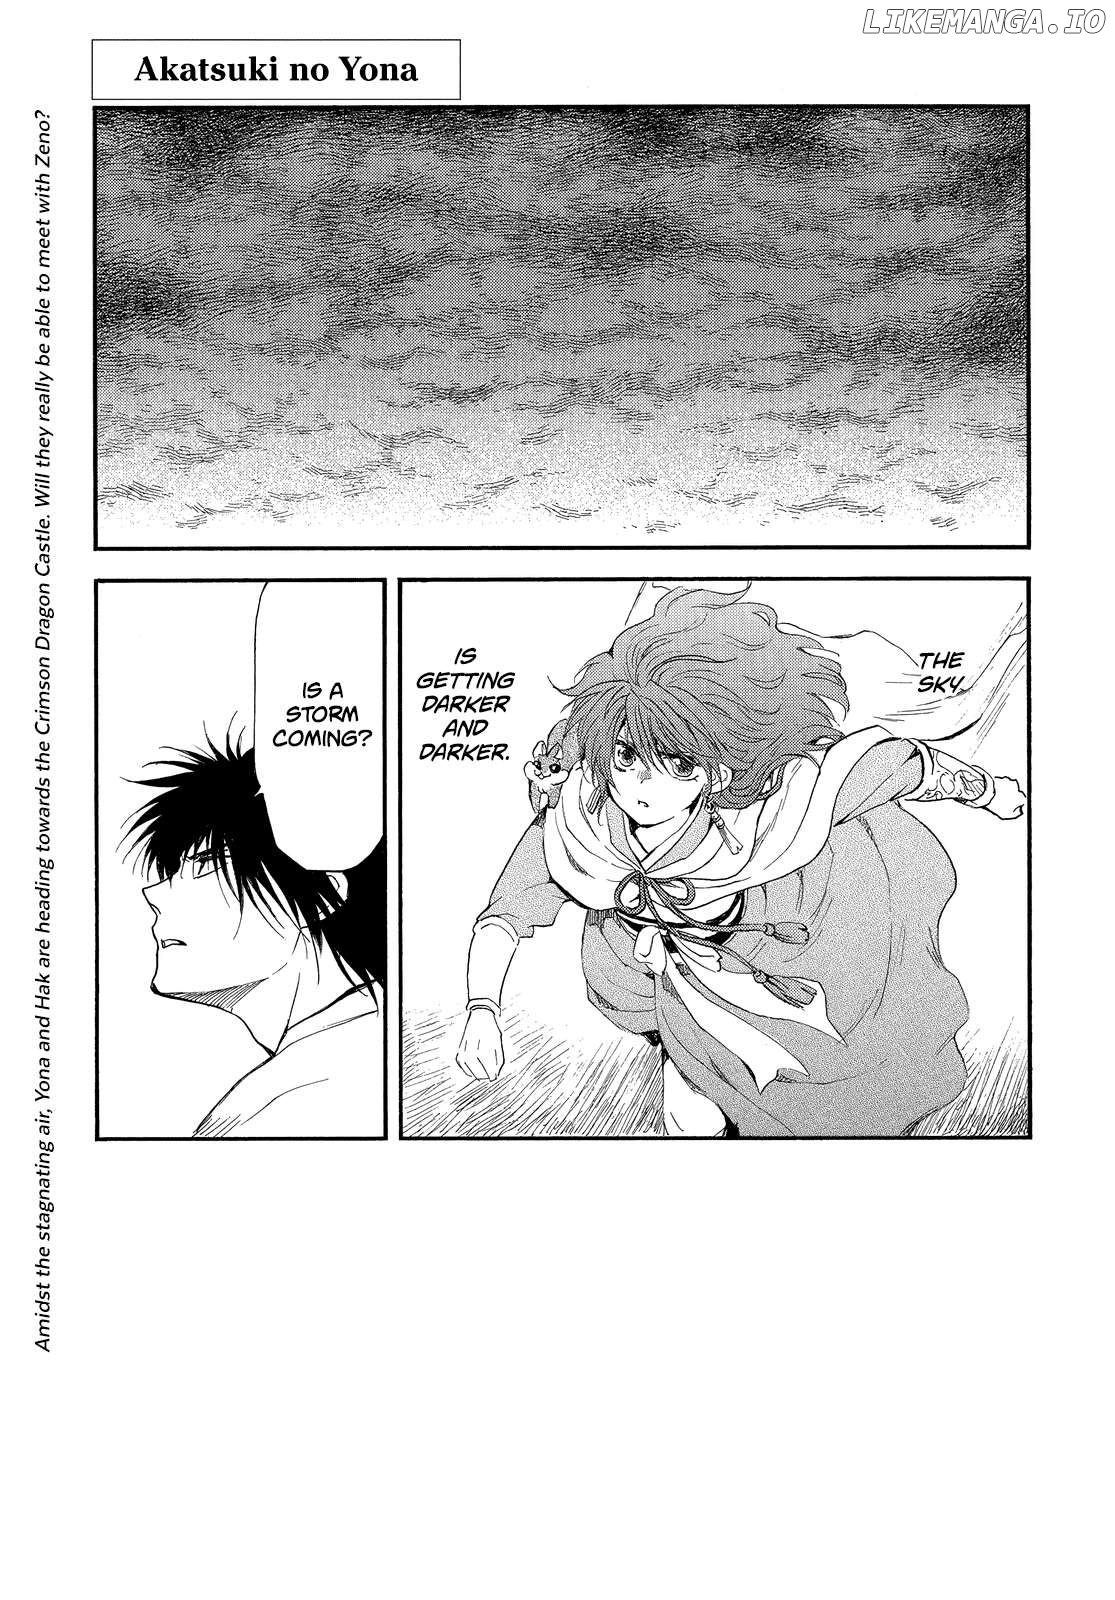 Akatsuki no Yona Chapter 259 - page 2